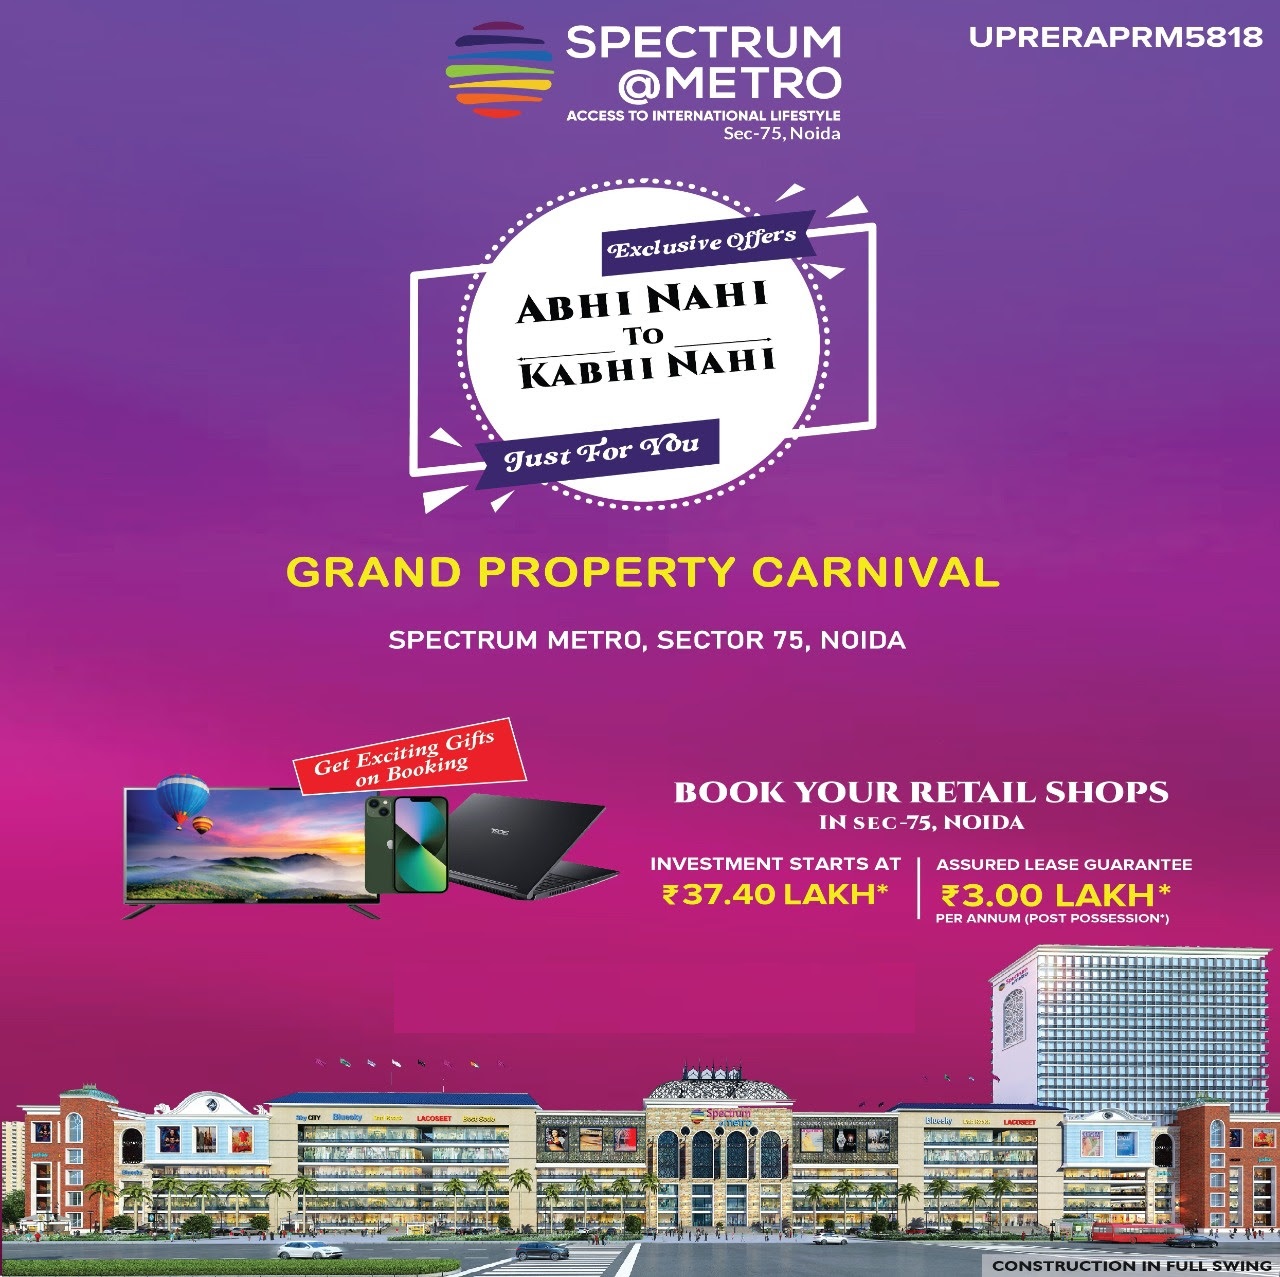 Grand property carnival at Spectrum Metro in Sector 75, Noida